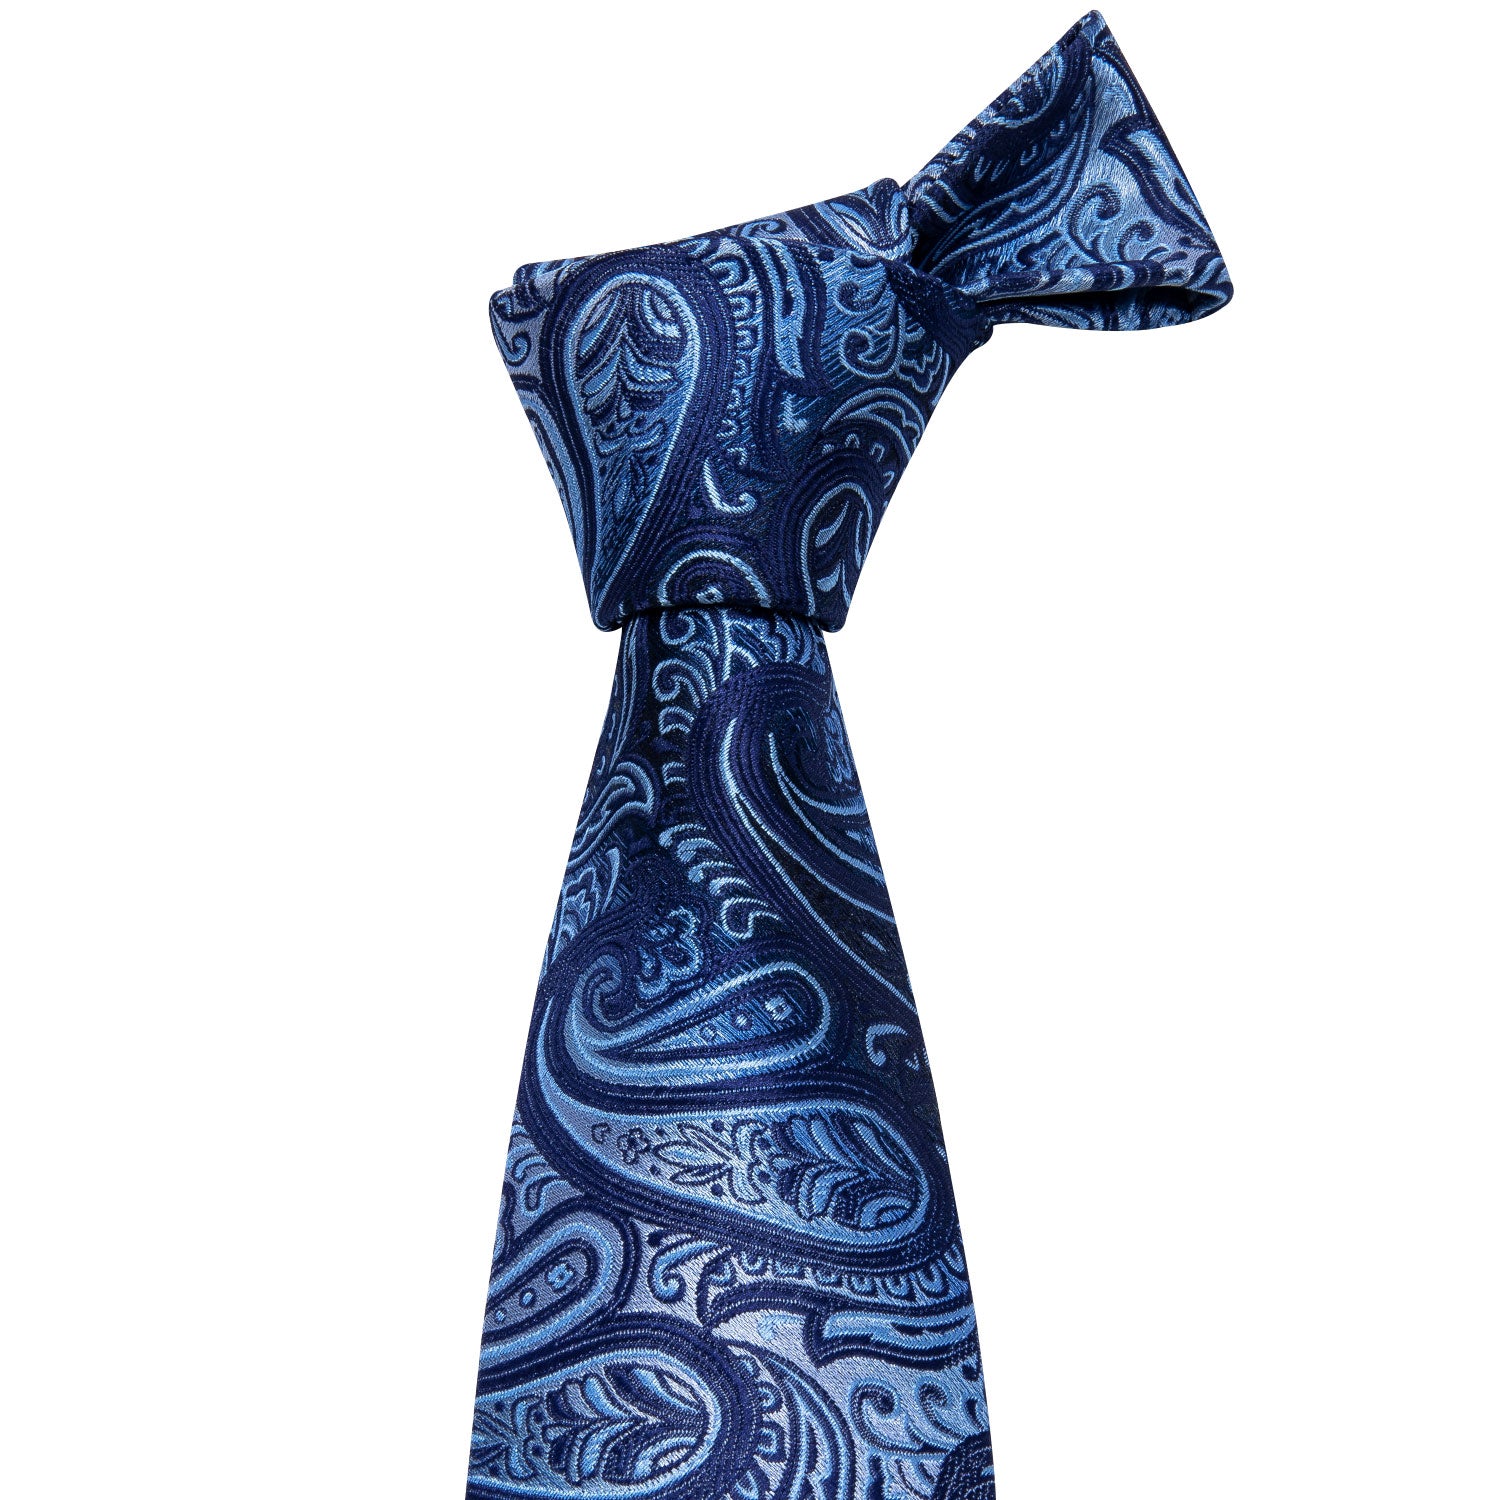 Barry.wang Blue Tie Awesome Paisley Men's Tie Handkerchief Cufflinks Set